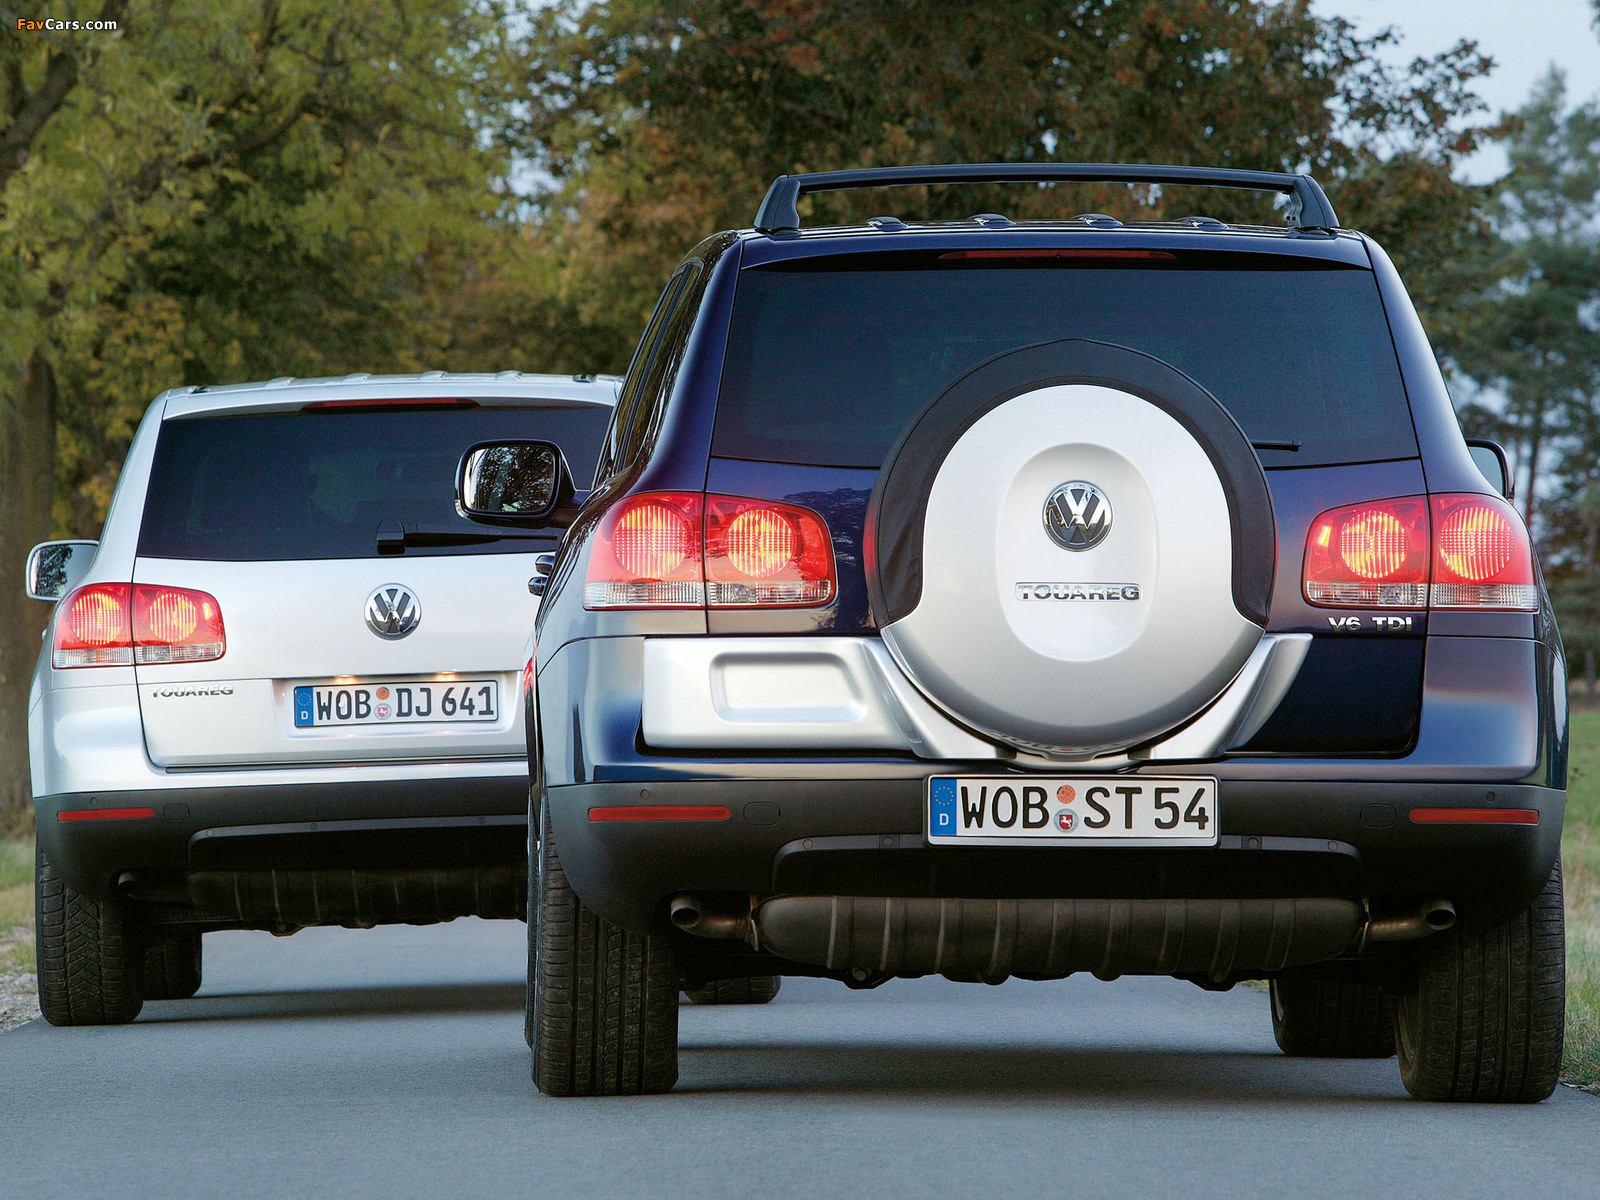 Volkswagen Touareg V6 TDI & V6 3.2 2003-06 images (1600 x 1200)